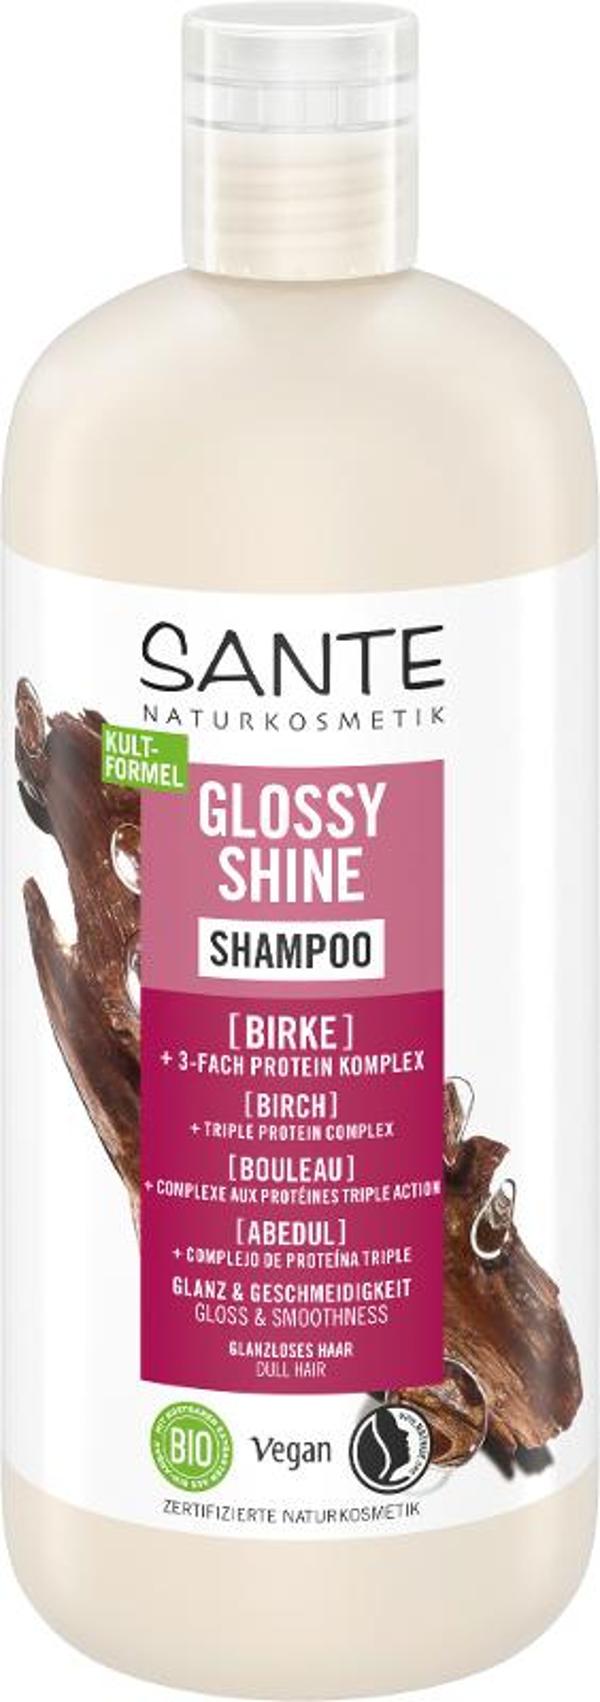 Produktfoto zu Glossy Shine Shampoo Birke 500ml